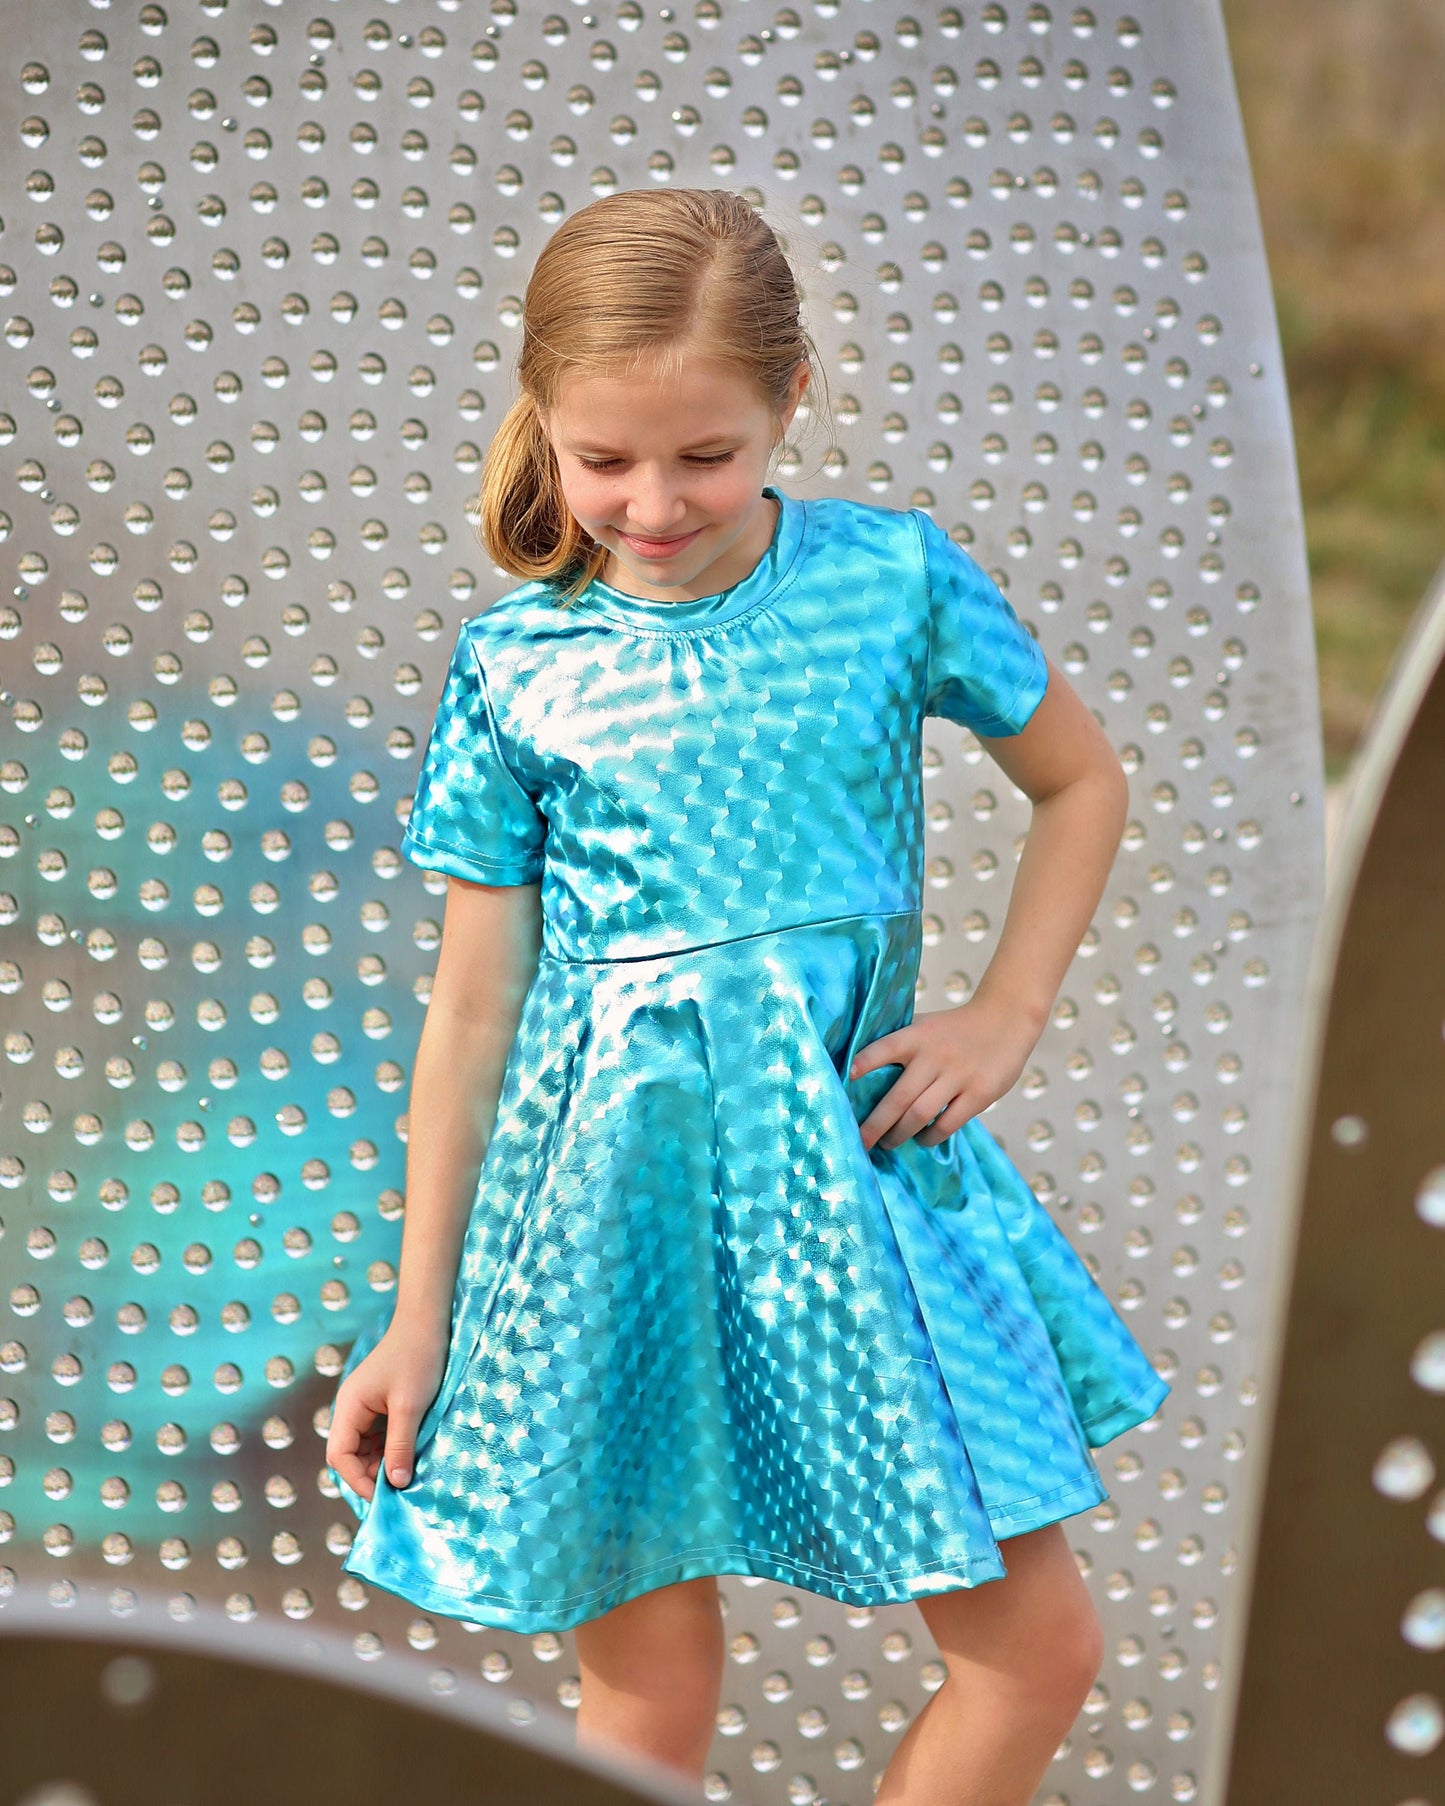 Metallic Holographic Aqua Dress - Metallic Twirly Dress - Twirly Dress - Birthday Dress - Party Dress - Aqua Metal Dress